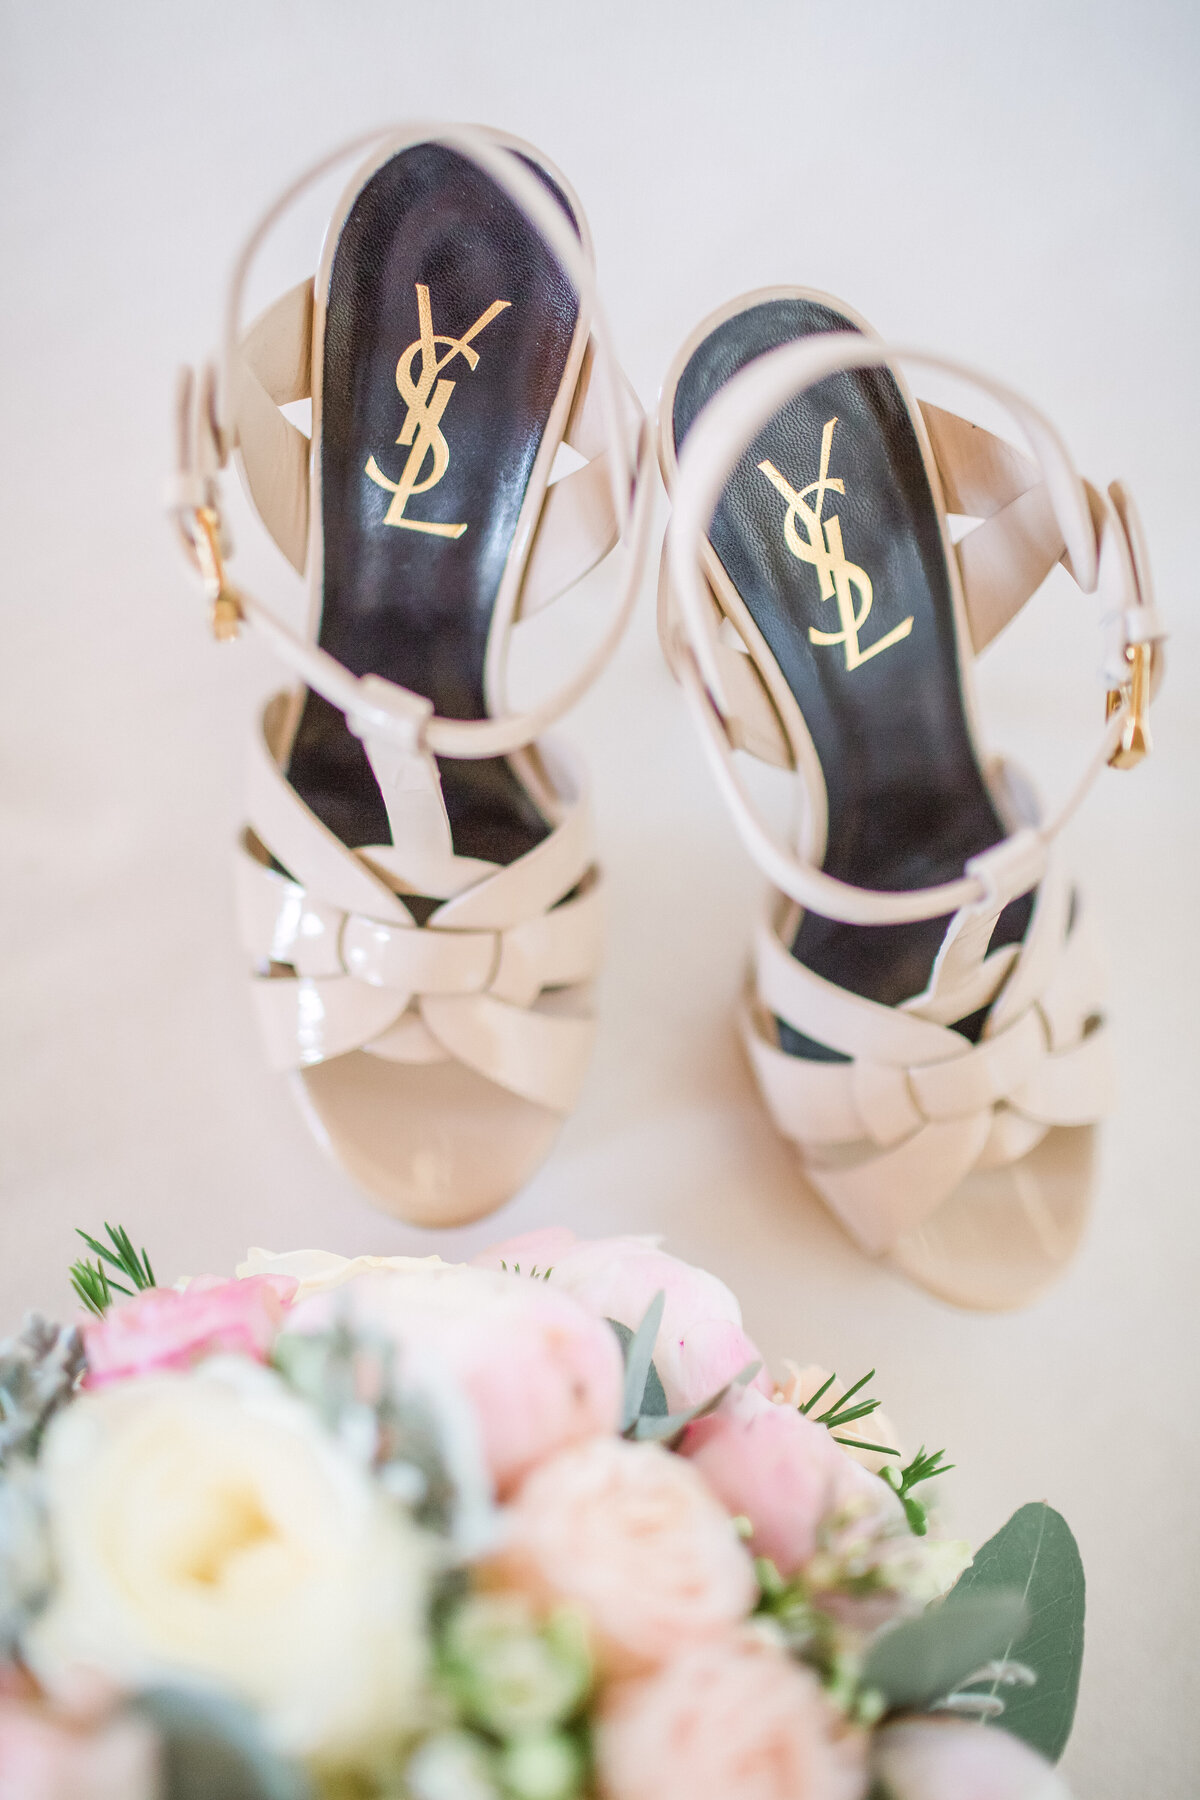 designer-ysl-wedding-shoes-luxury-photographer